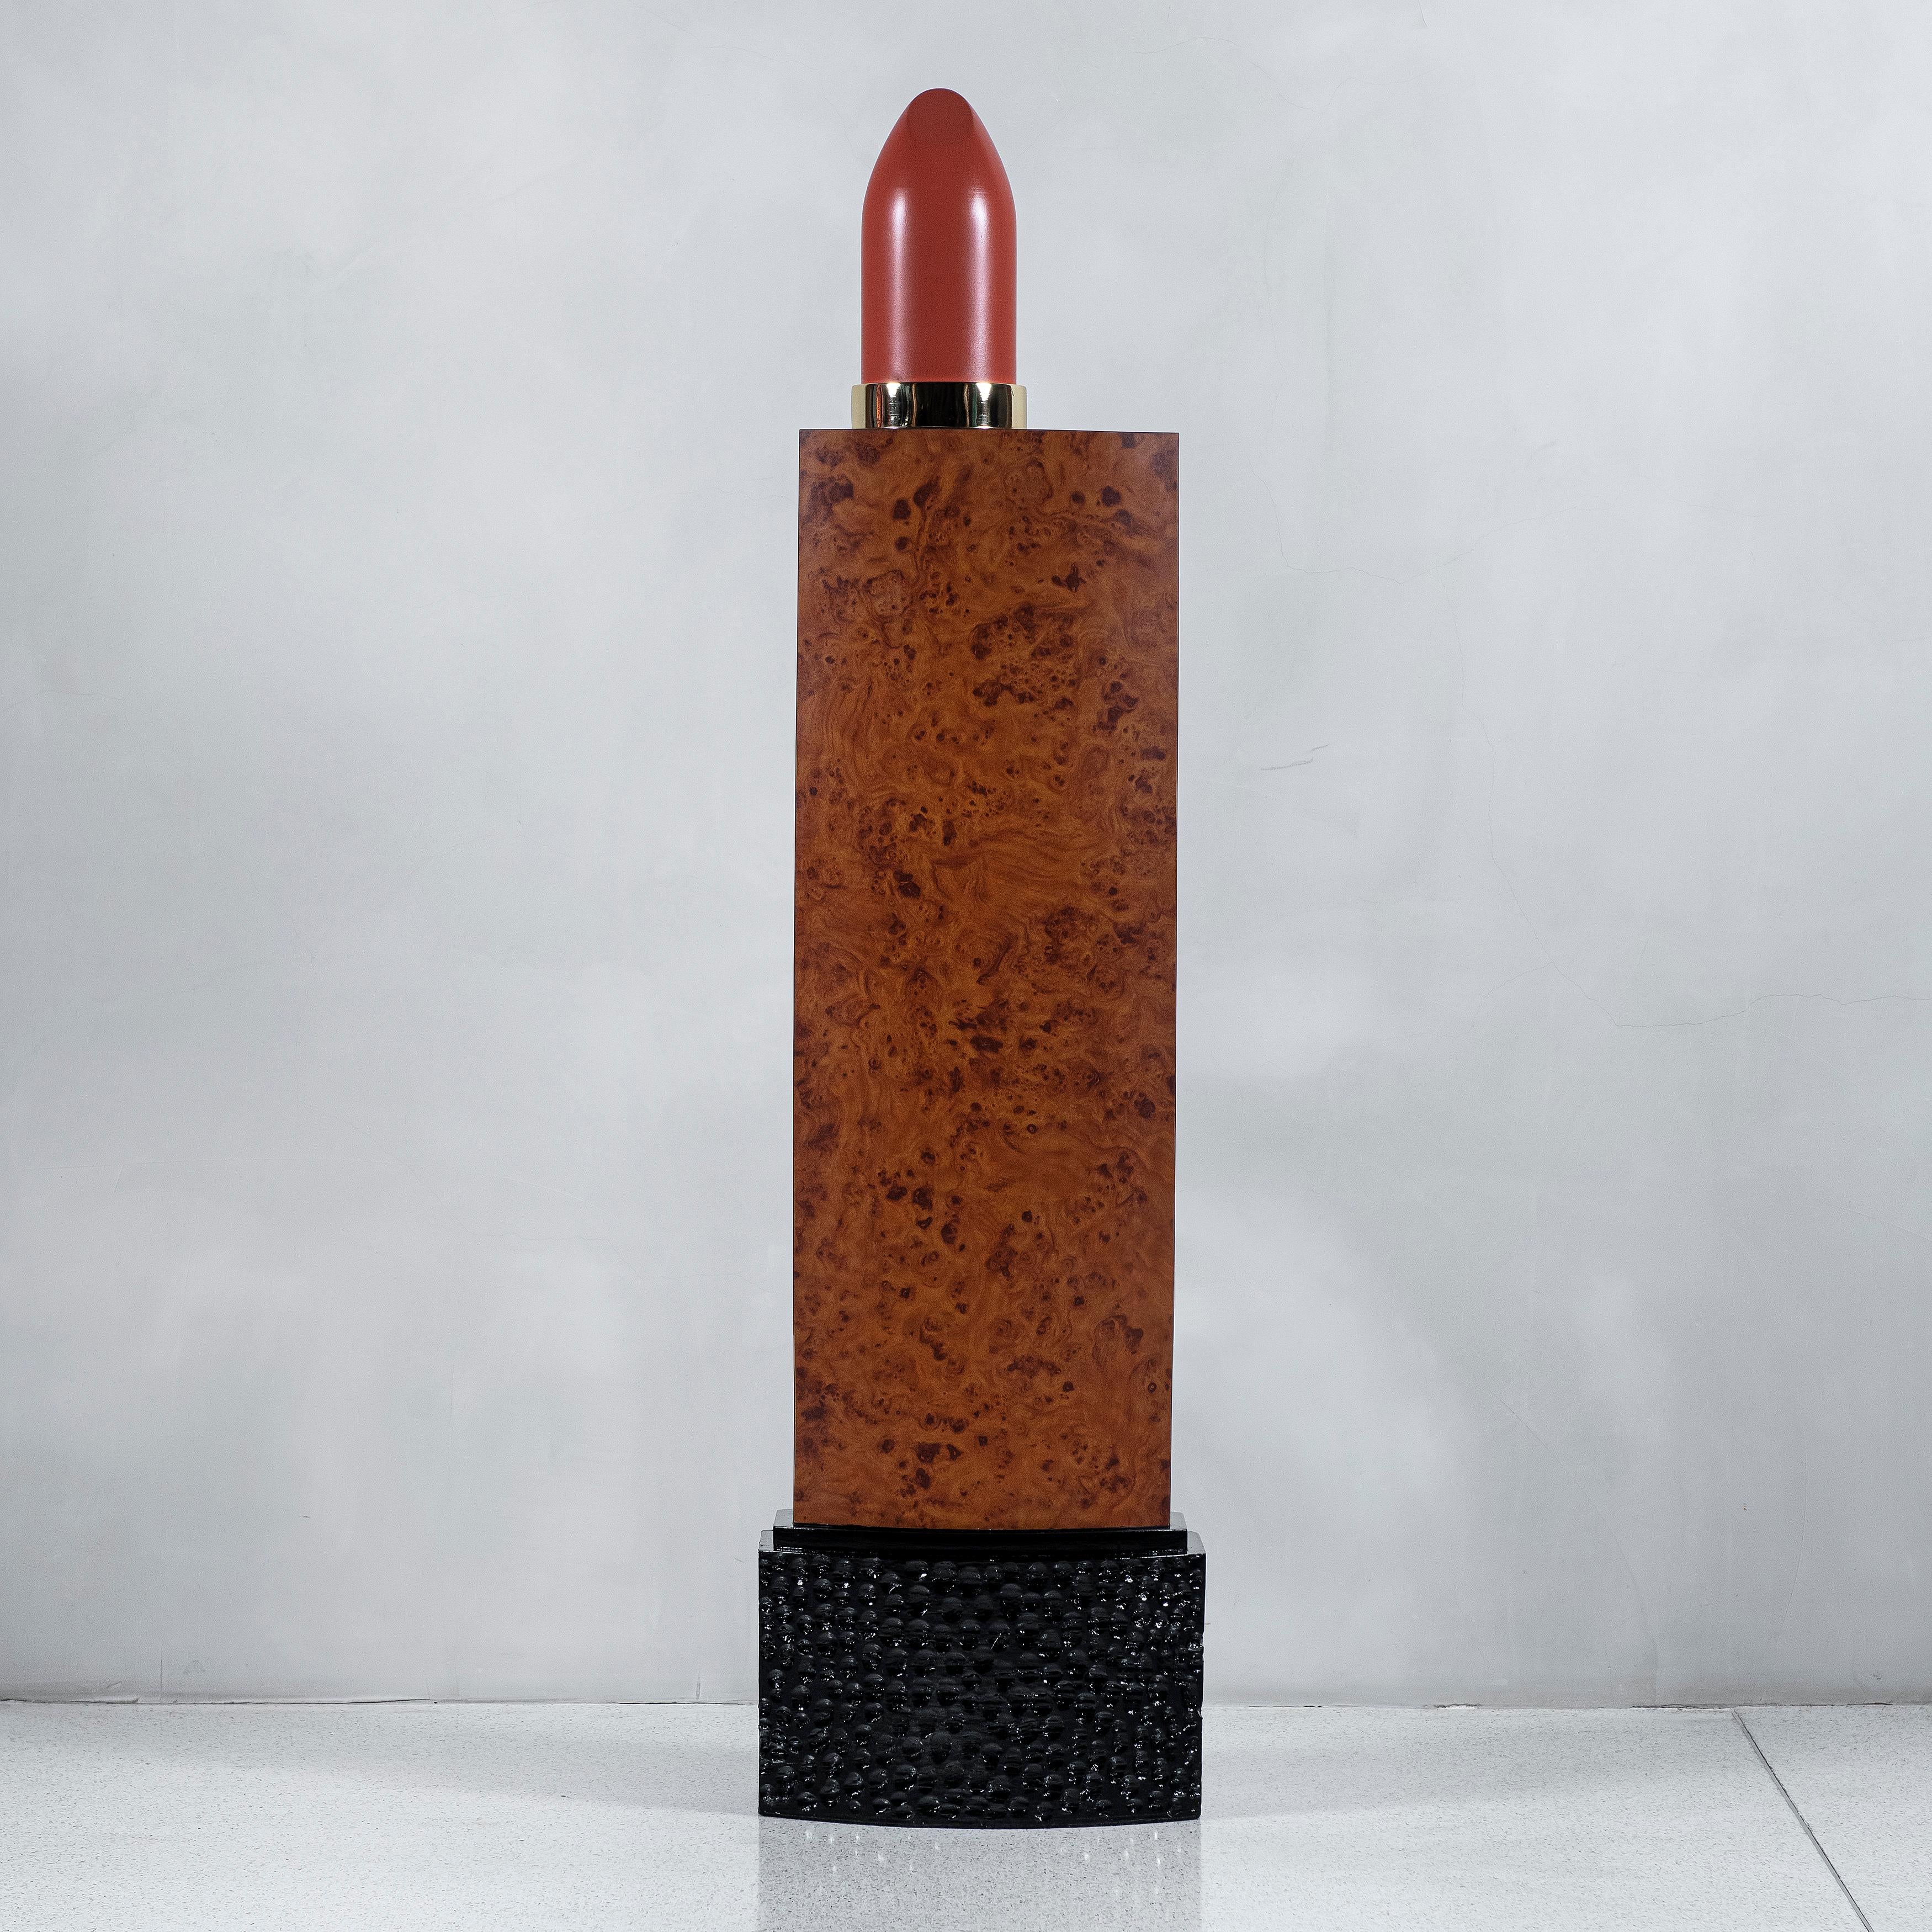 Vanity lipstick sculpture by Daniel Basso, Argentina, 2020. 
Titled 